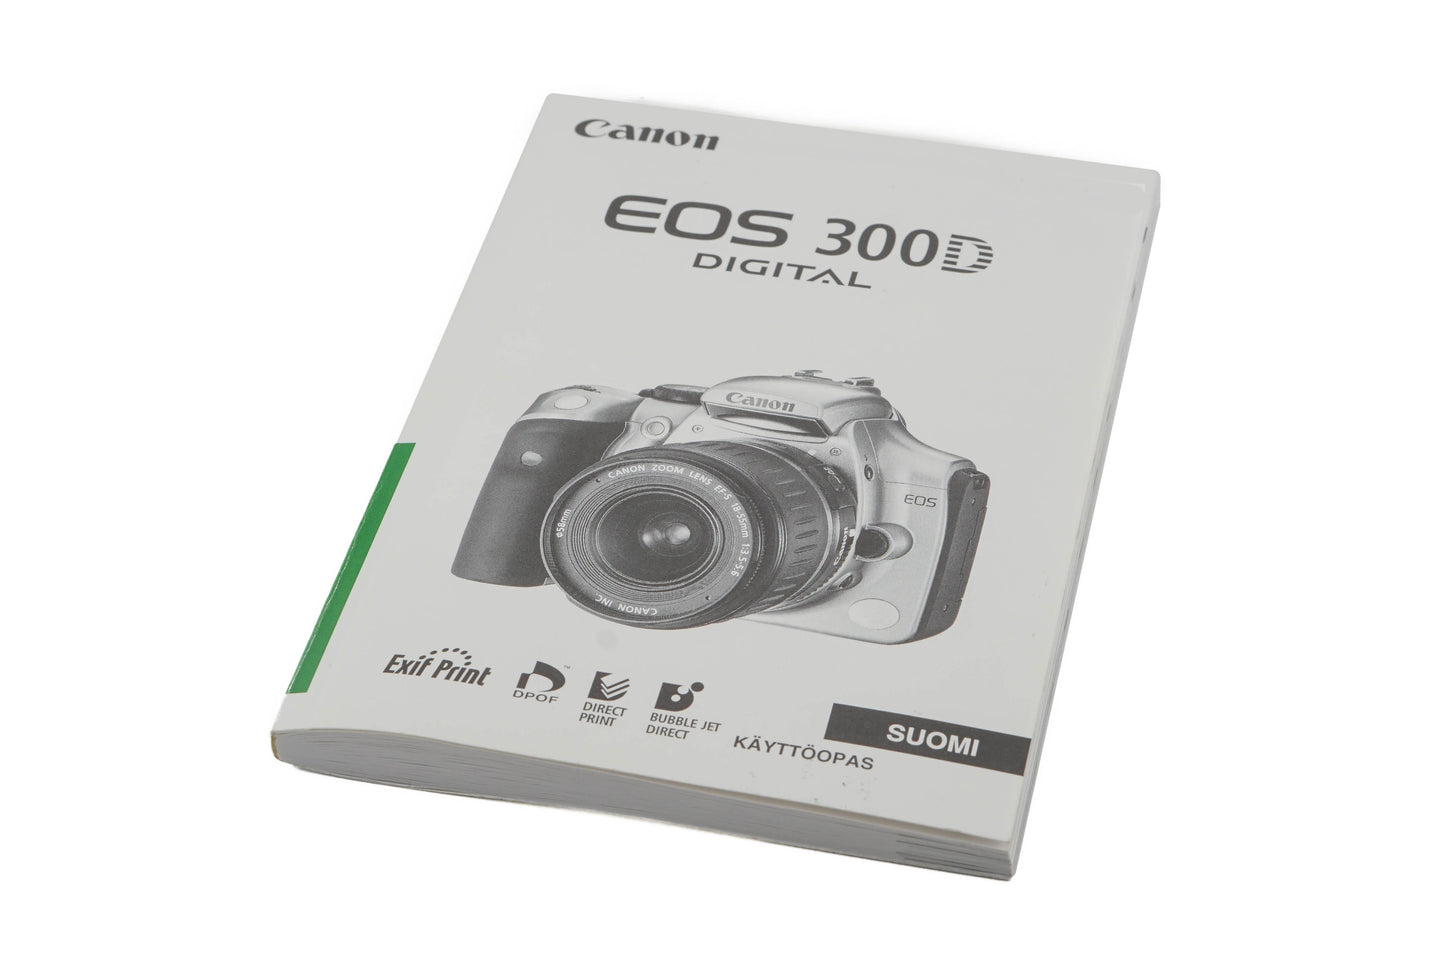 Canon EOS 300D Digital Instructions